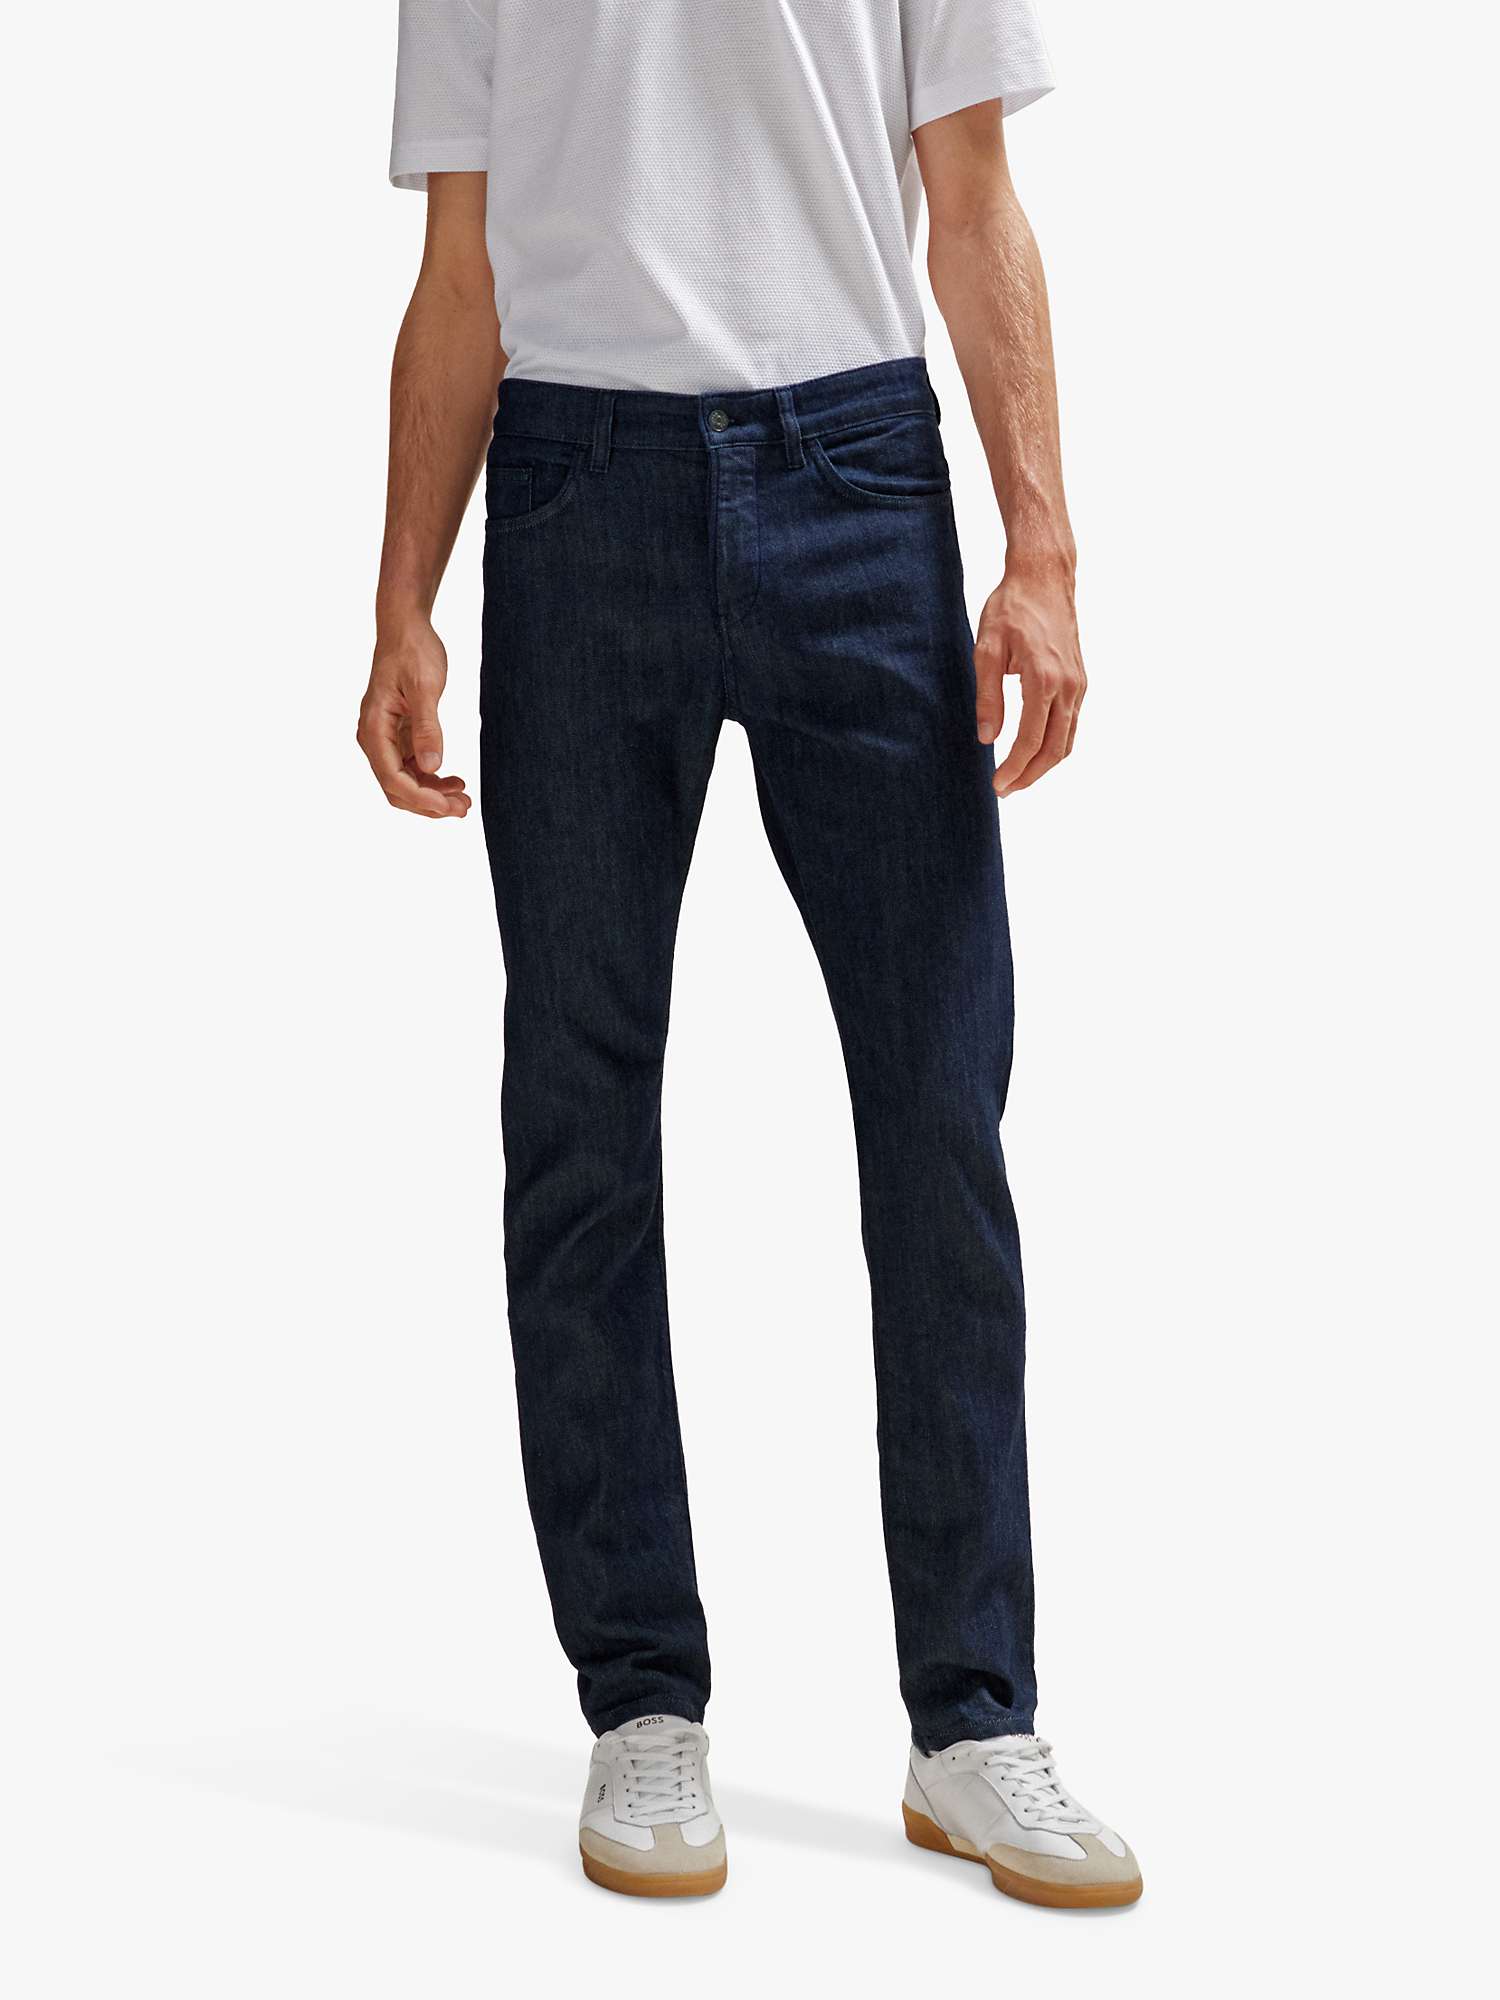 Buy BOSS Delaware Slim Fit Jeans, Dark Blue Online at johnlewis.com